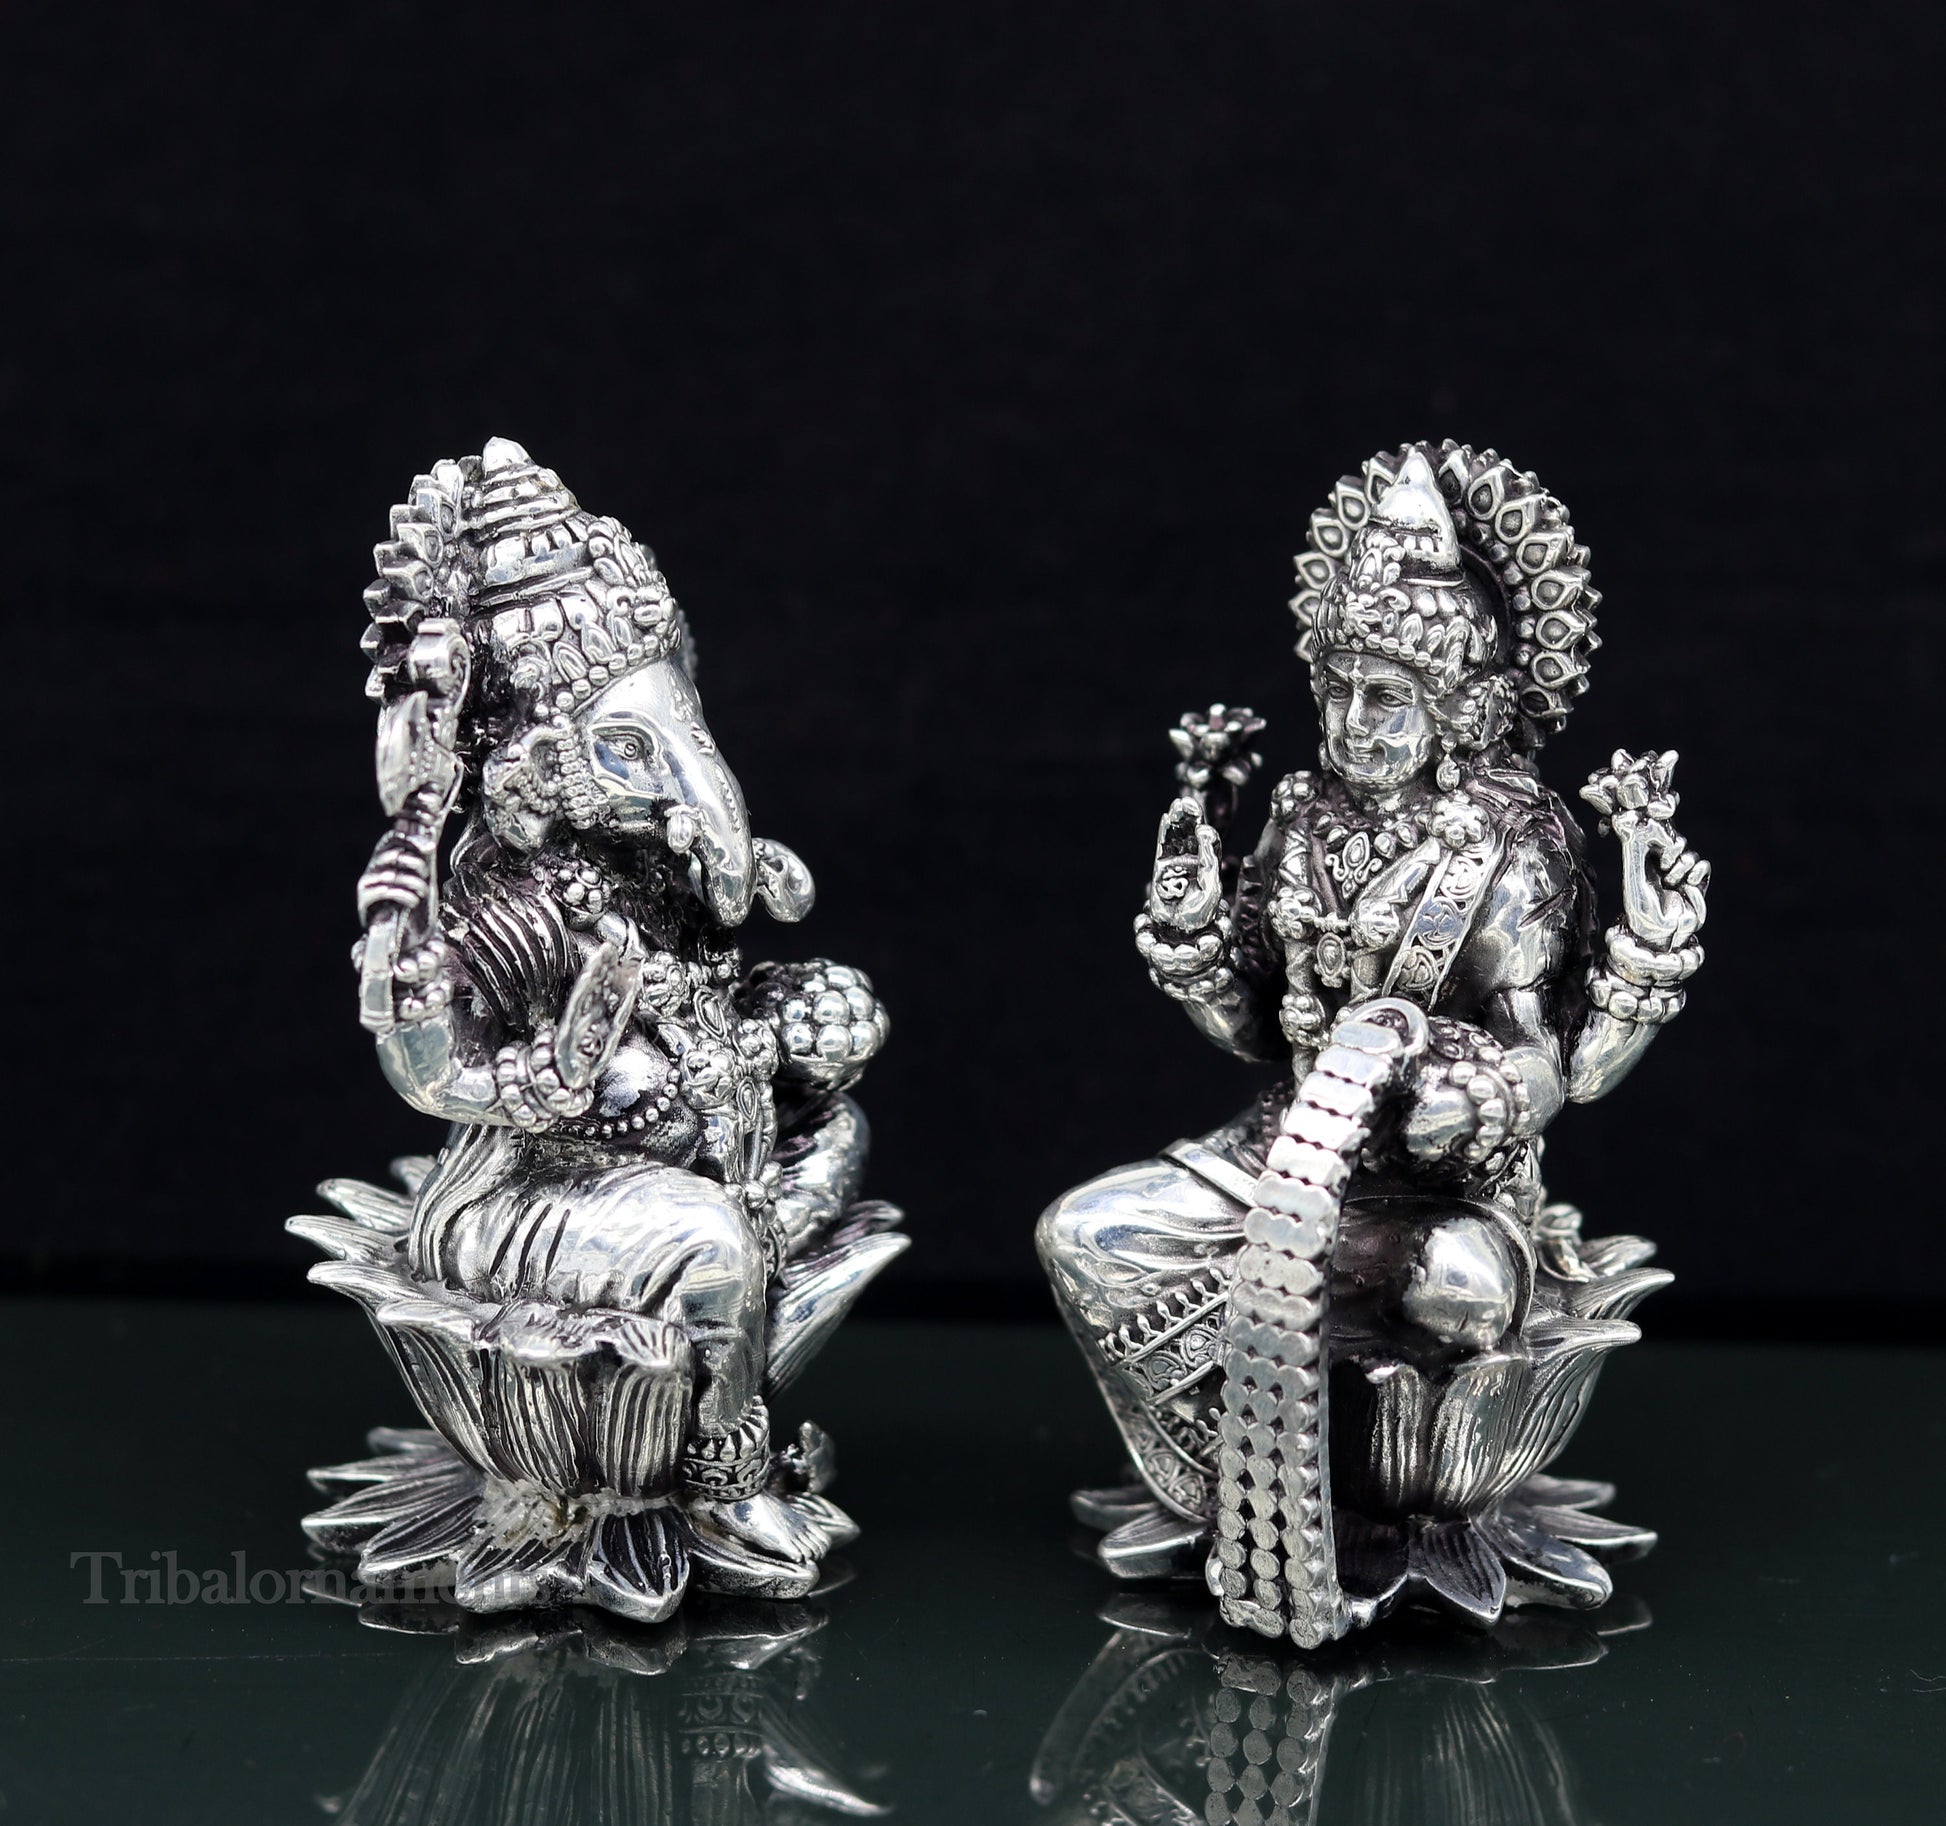 3.3" small 925 Sterling silver handmade customized Hindu idol Laxmi and Ganesha statue, puja article figurine, home décor Diwali puja art379 - TRIBAL ORNAMENTS